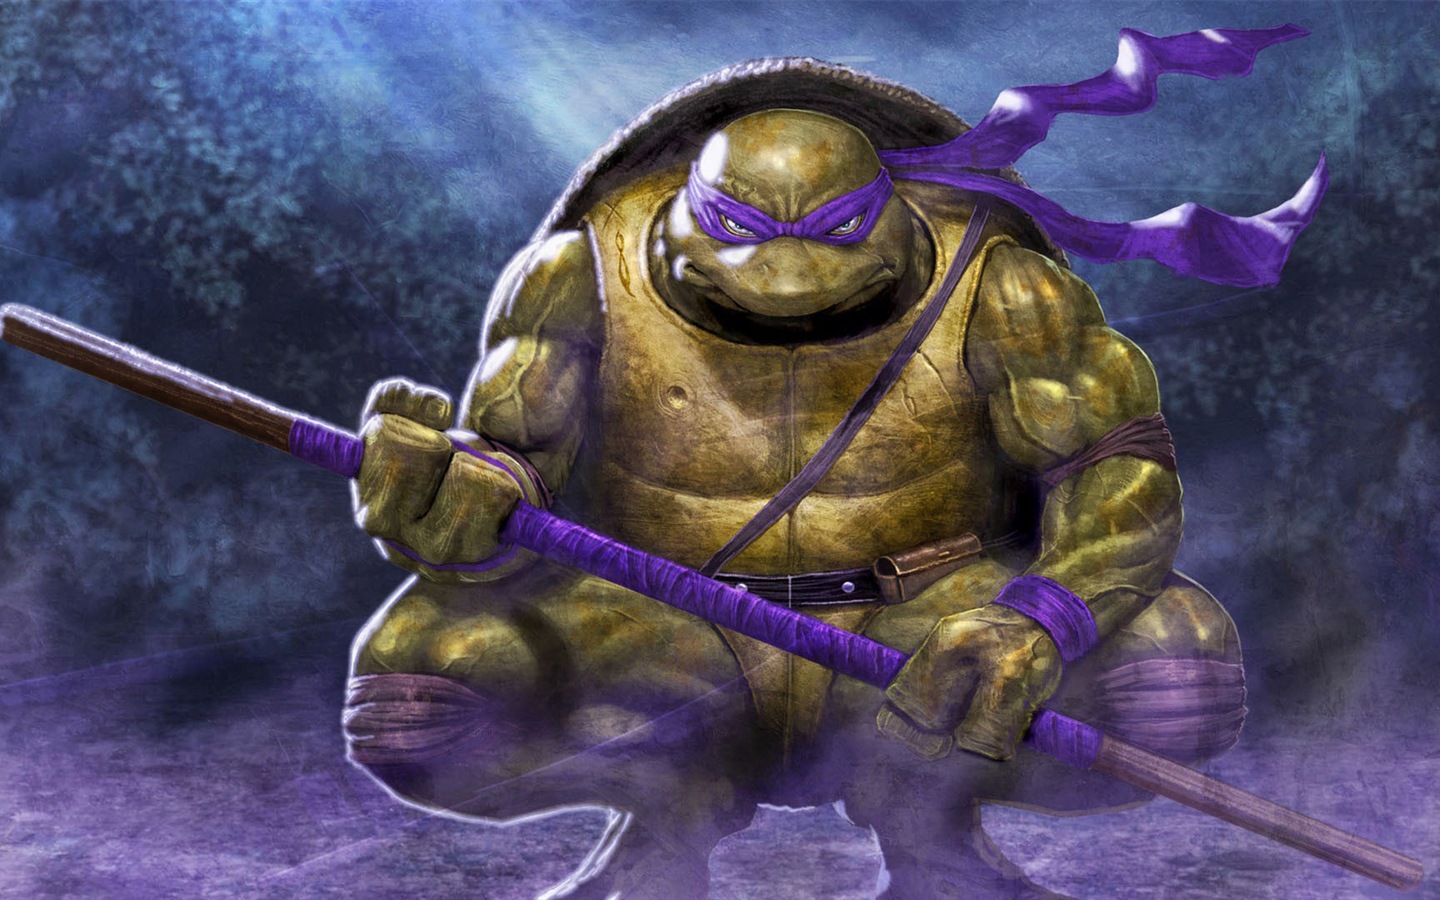 2014 Teenage Mutant Ninja Turtles HD movie wallpapers #13 - 1440x900